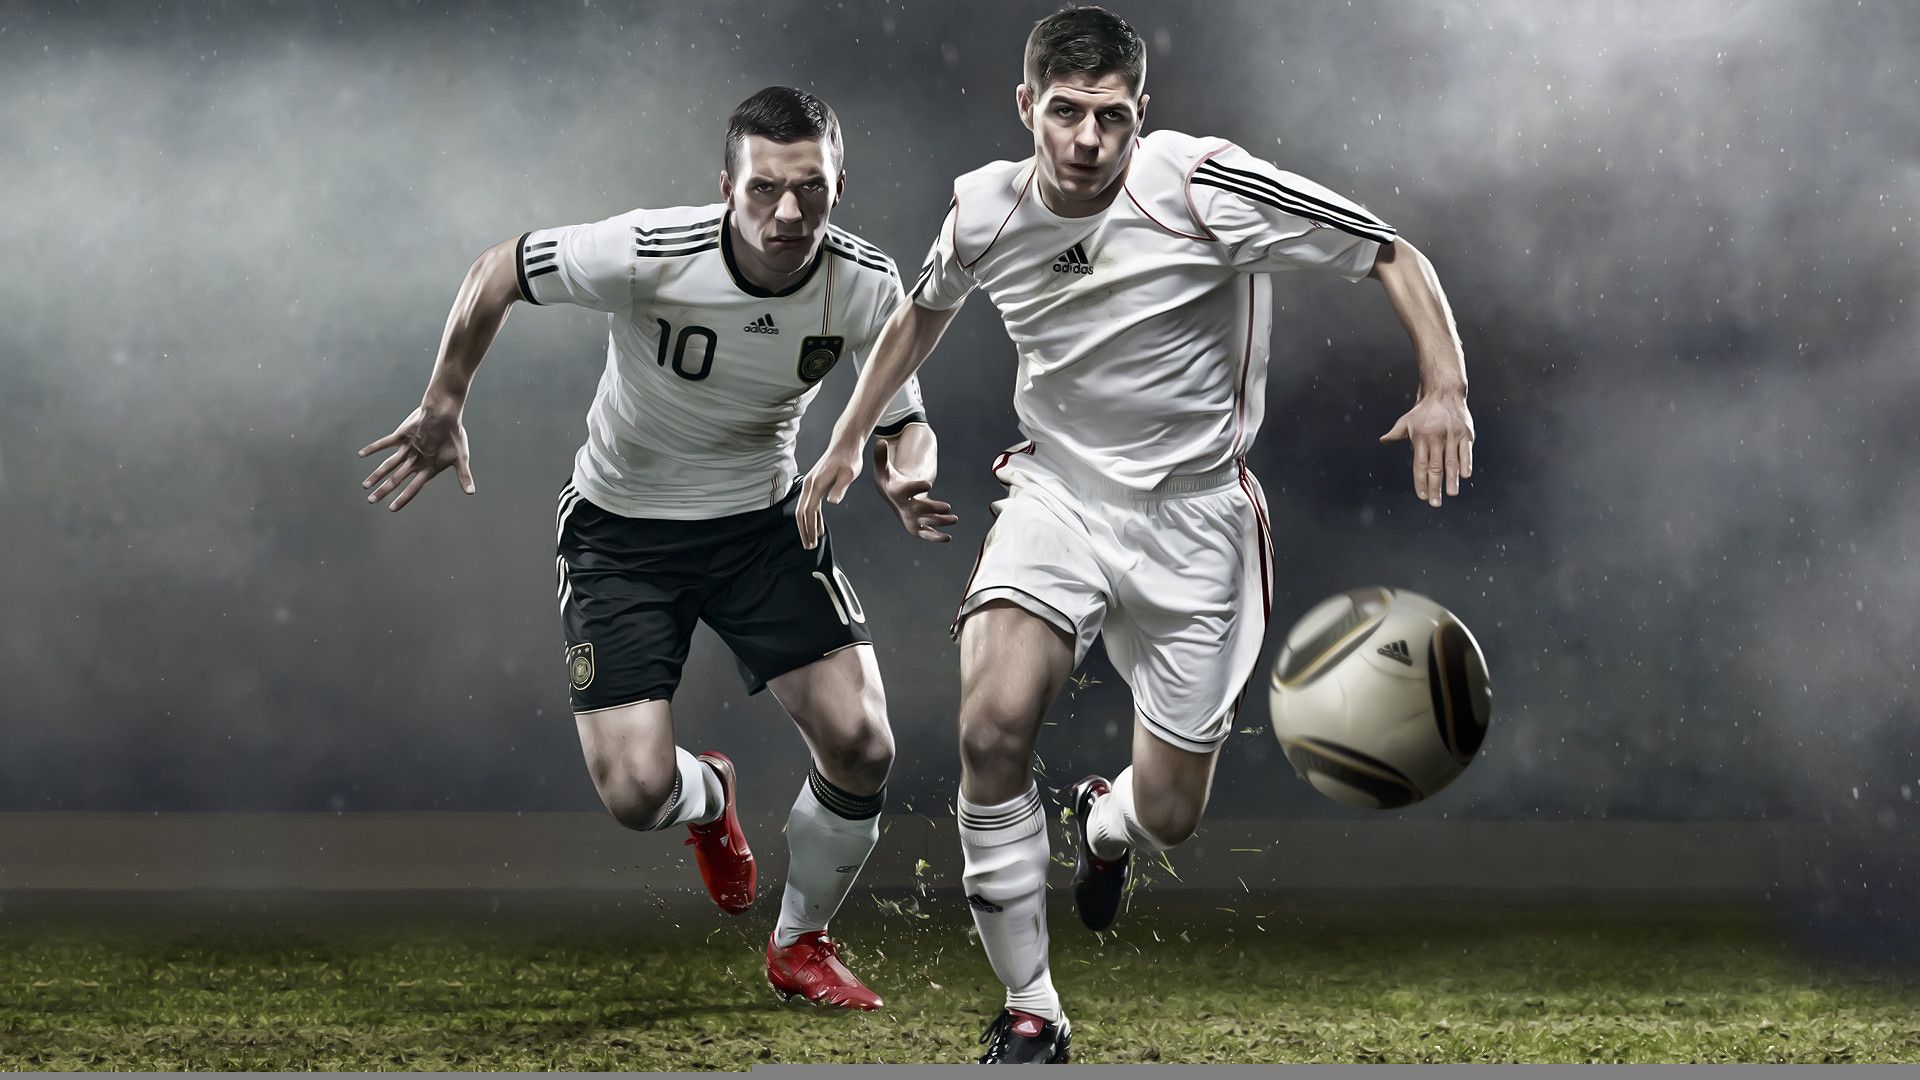 Adidas Soccer Wallpaper HD | PixelsTalk.Net